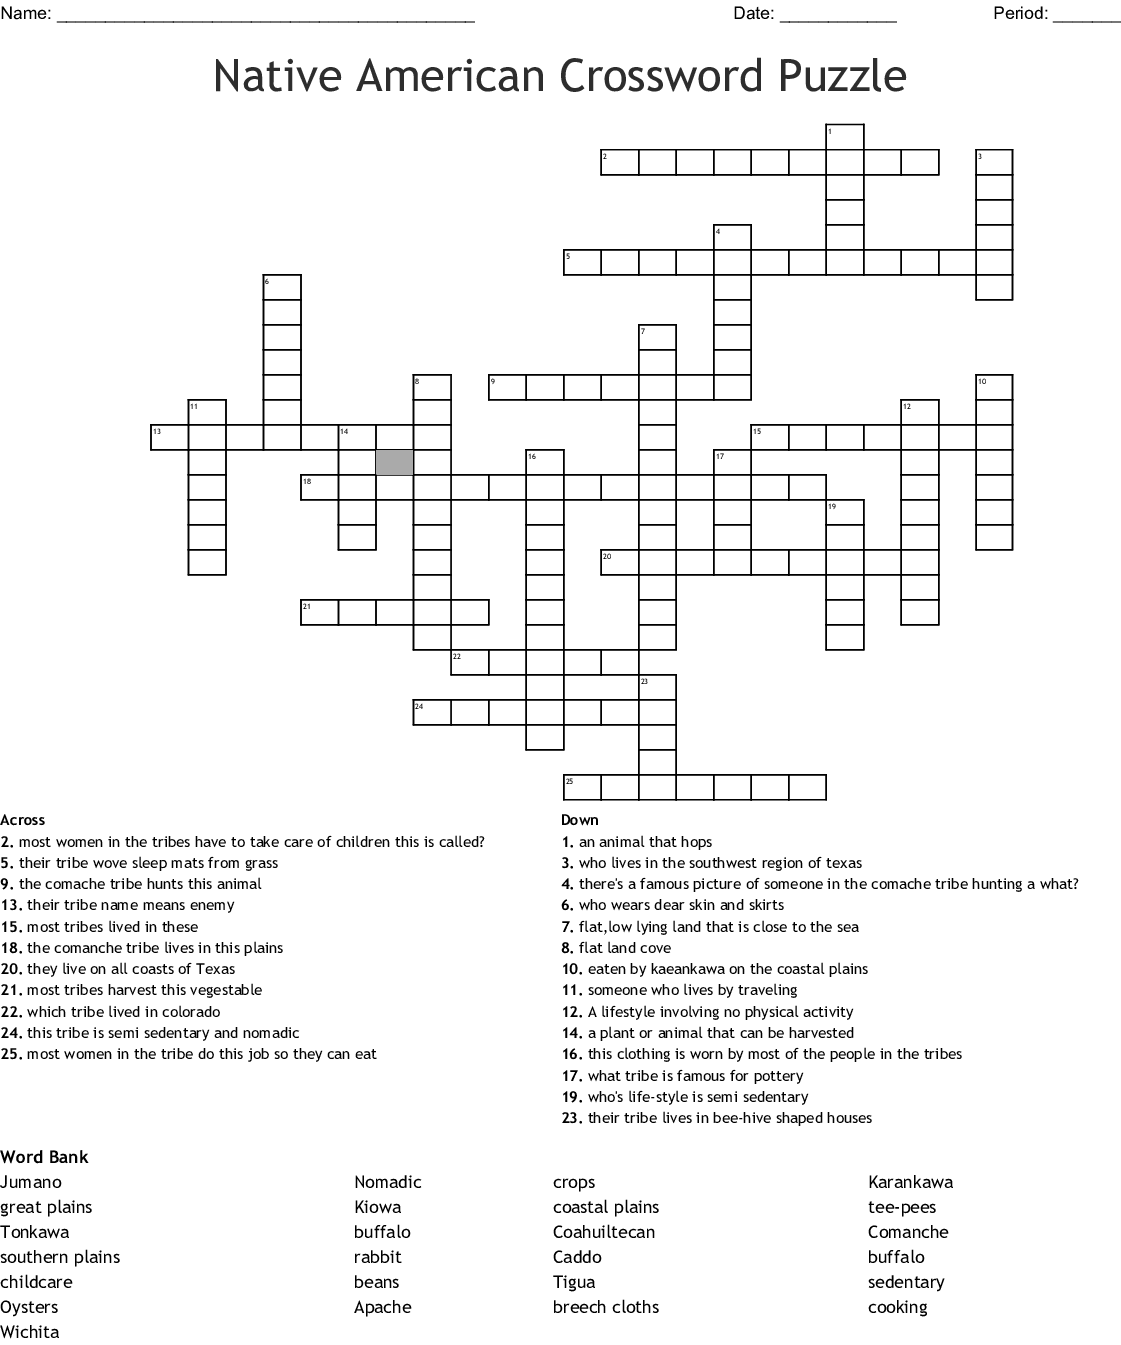 Native American Crossword Puzzle WordMint